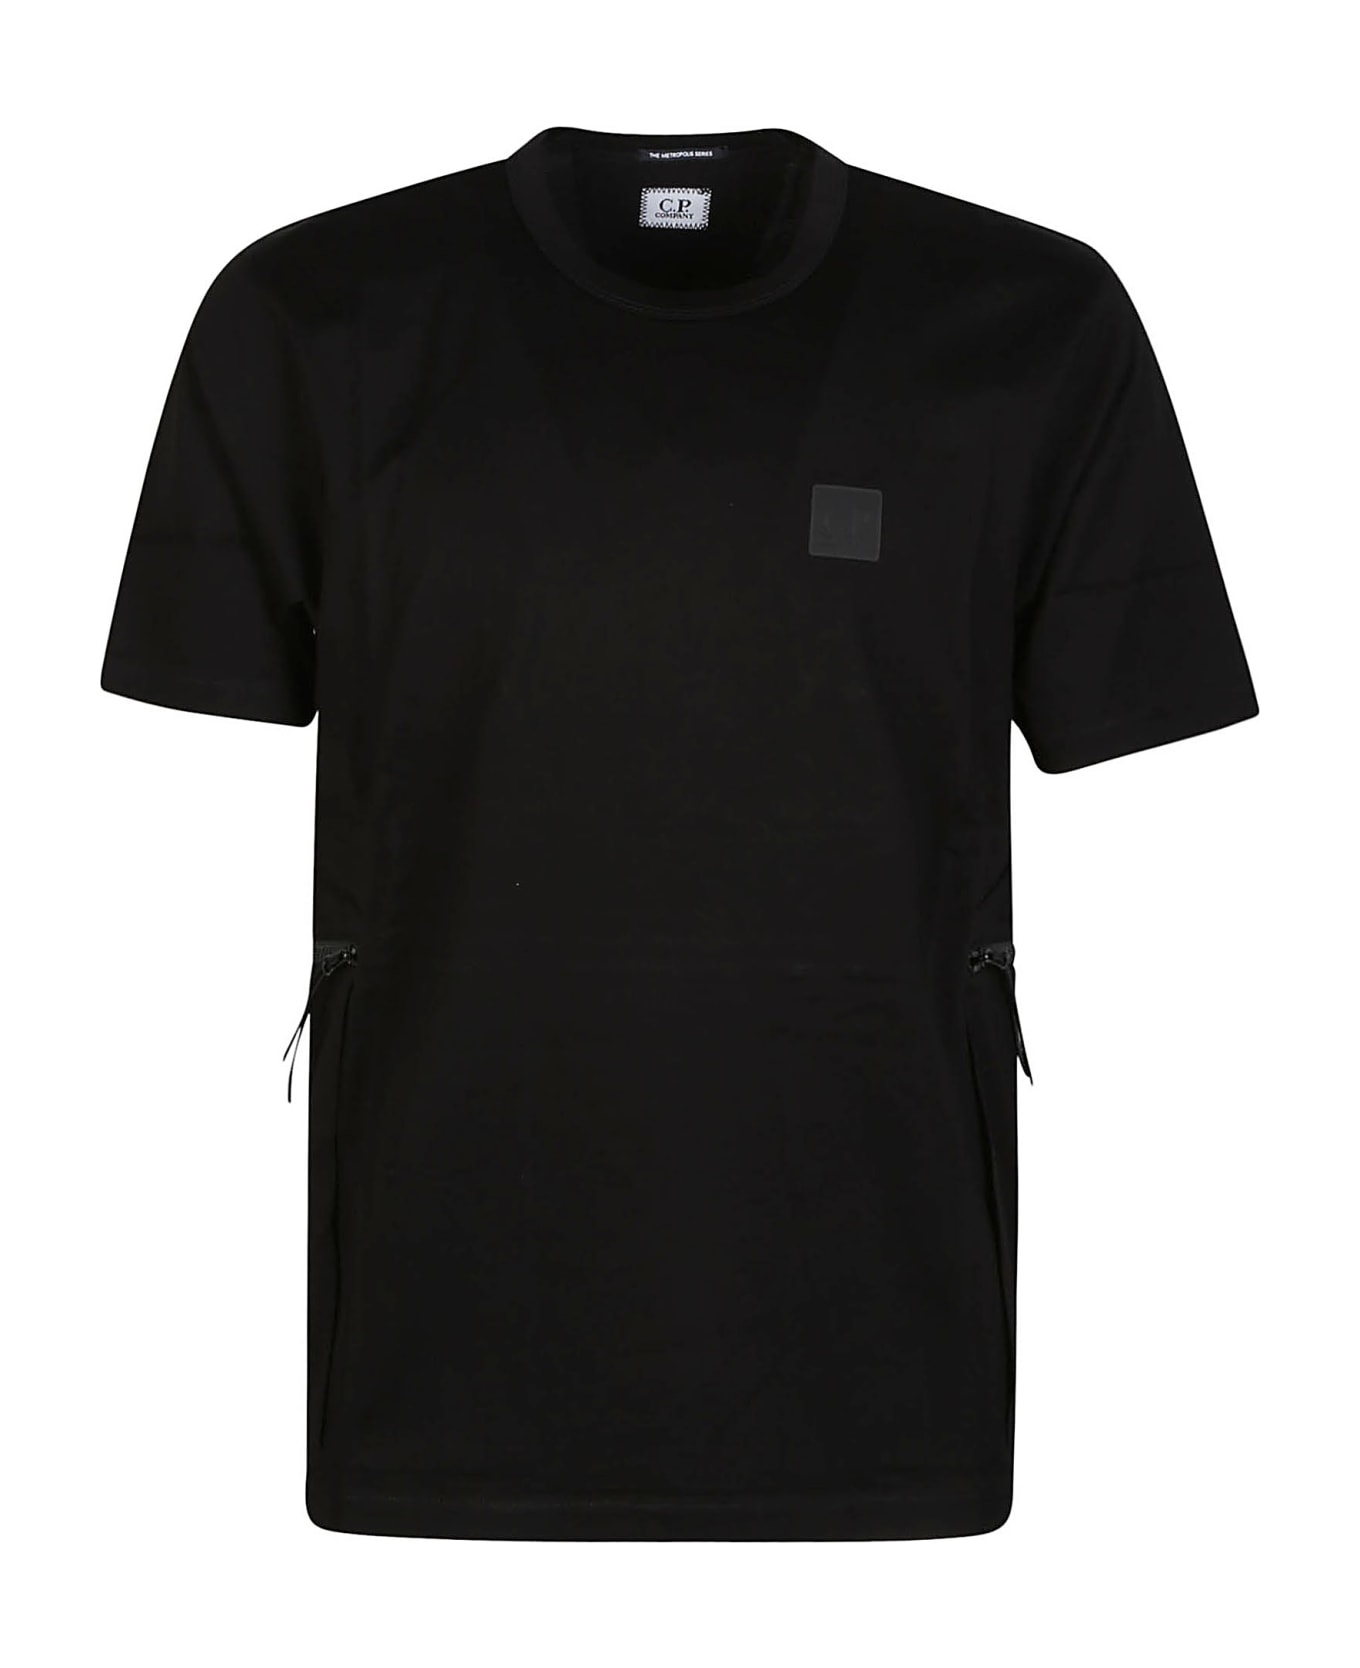 C.P. Company Metropolis Mercerized Jersey T-shirt - Black